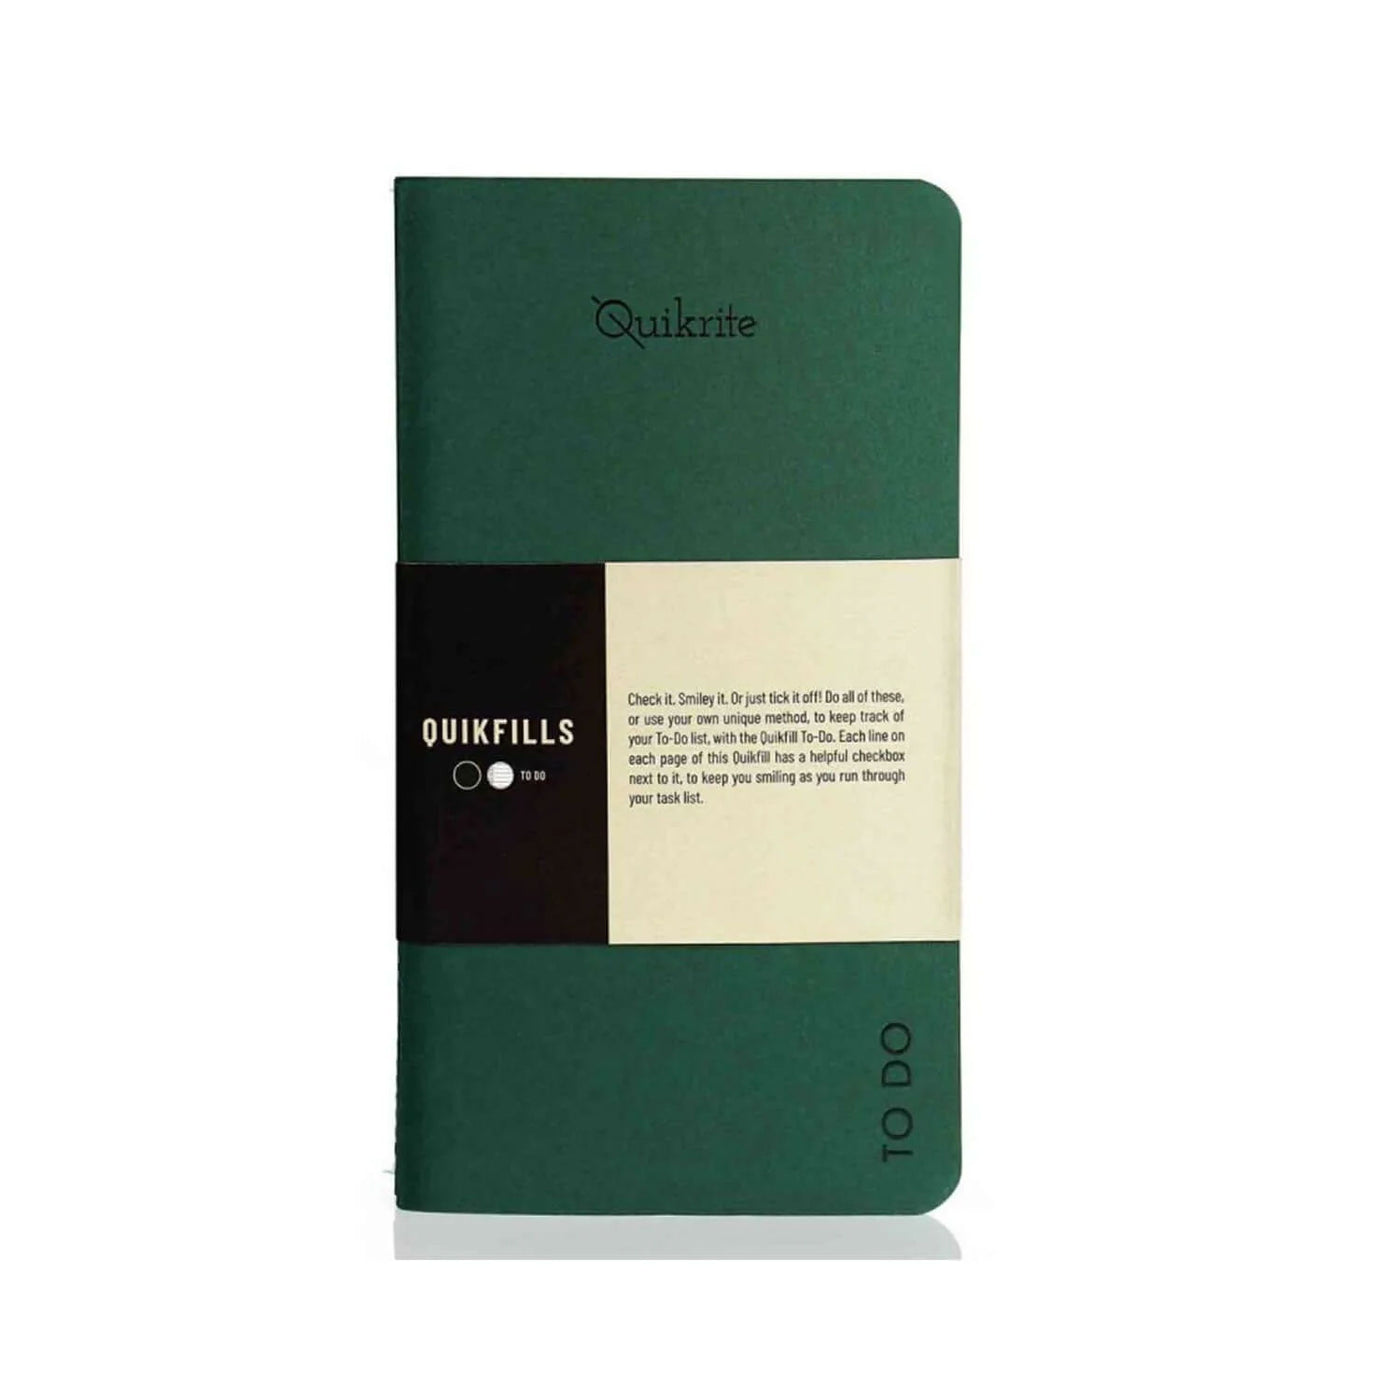 Pennline Quikfill Notebook Refill For Quikrite, Green - Set Of 2 1